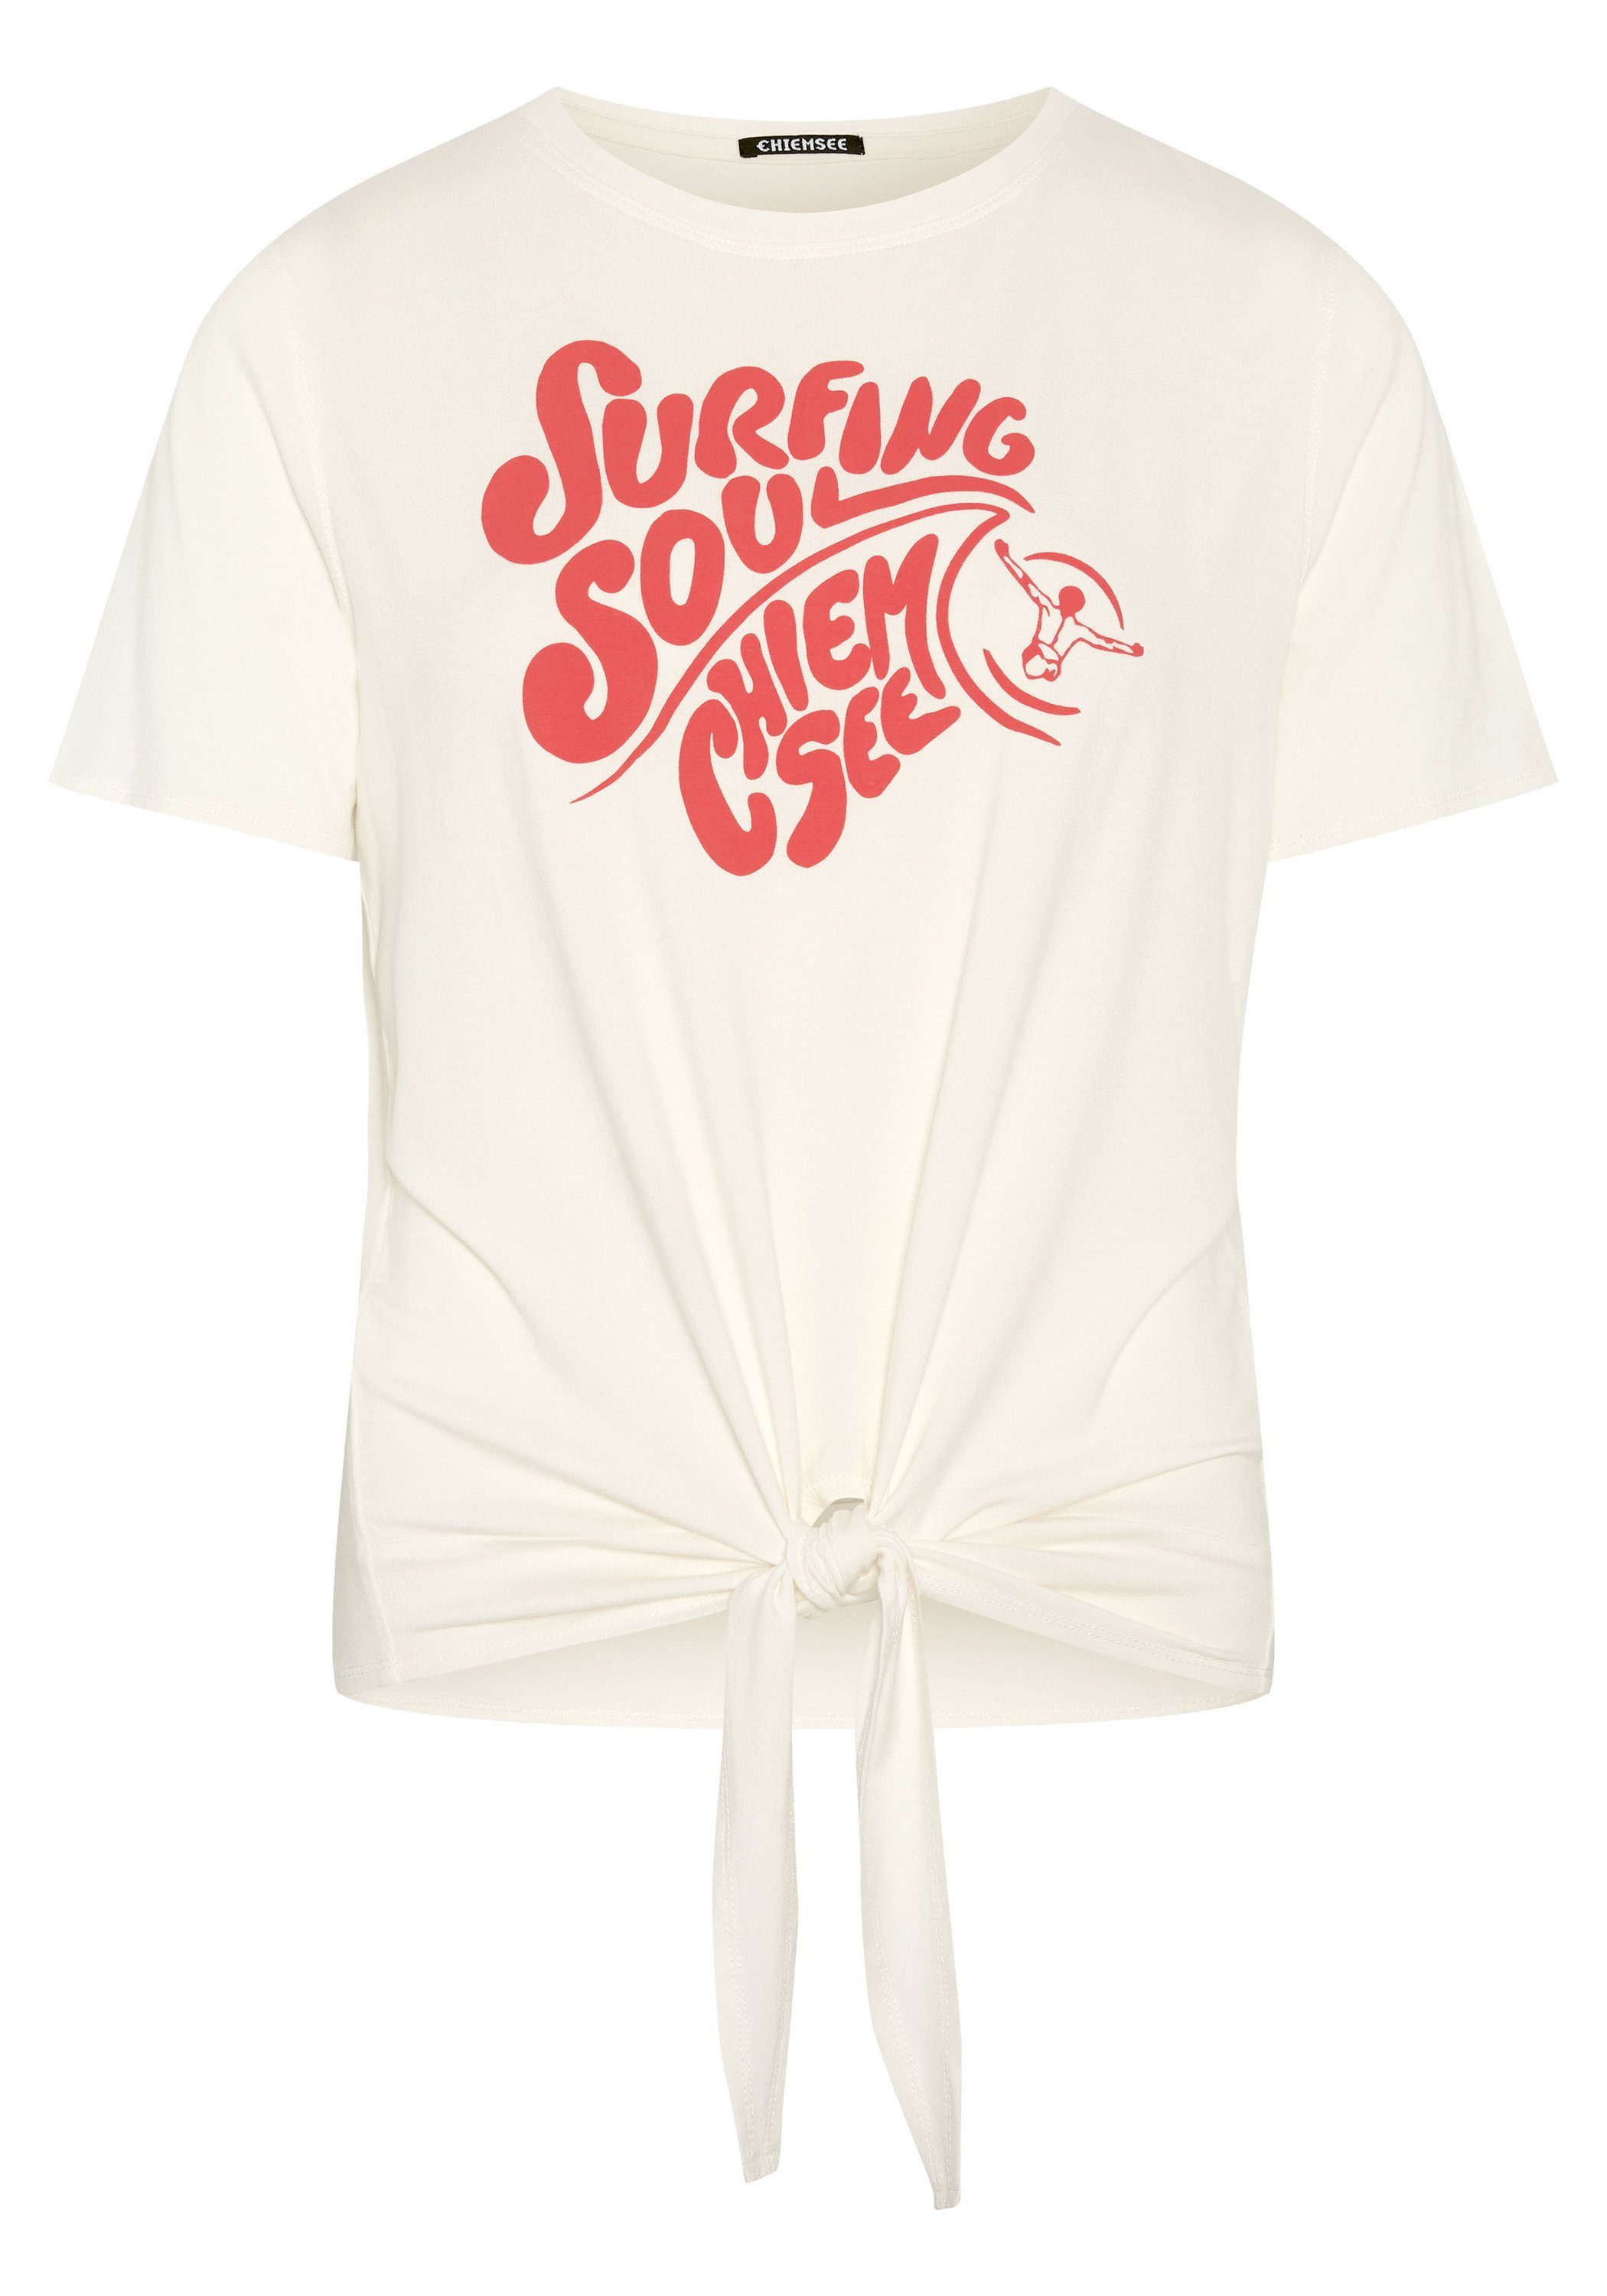 Chiemsee Print-Shirt gecropptes T-Shirt mit Saum zum Knoten 1 11-4202 Star White